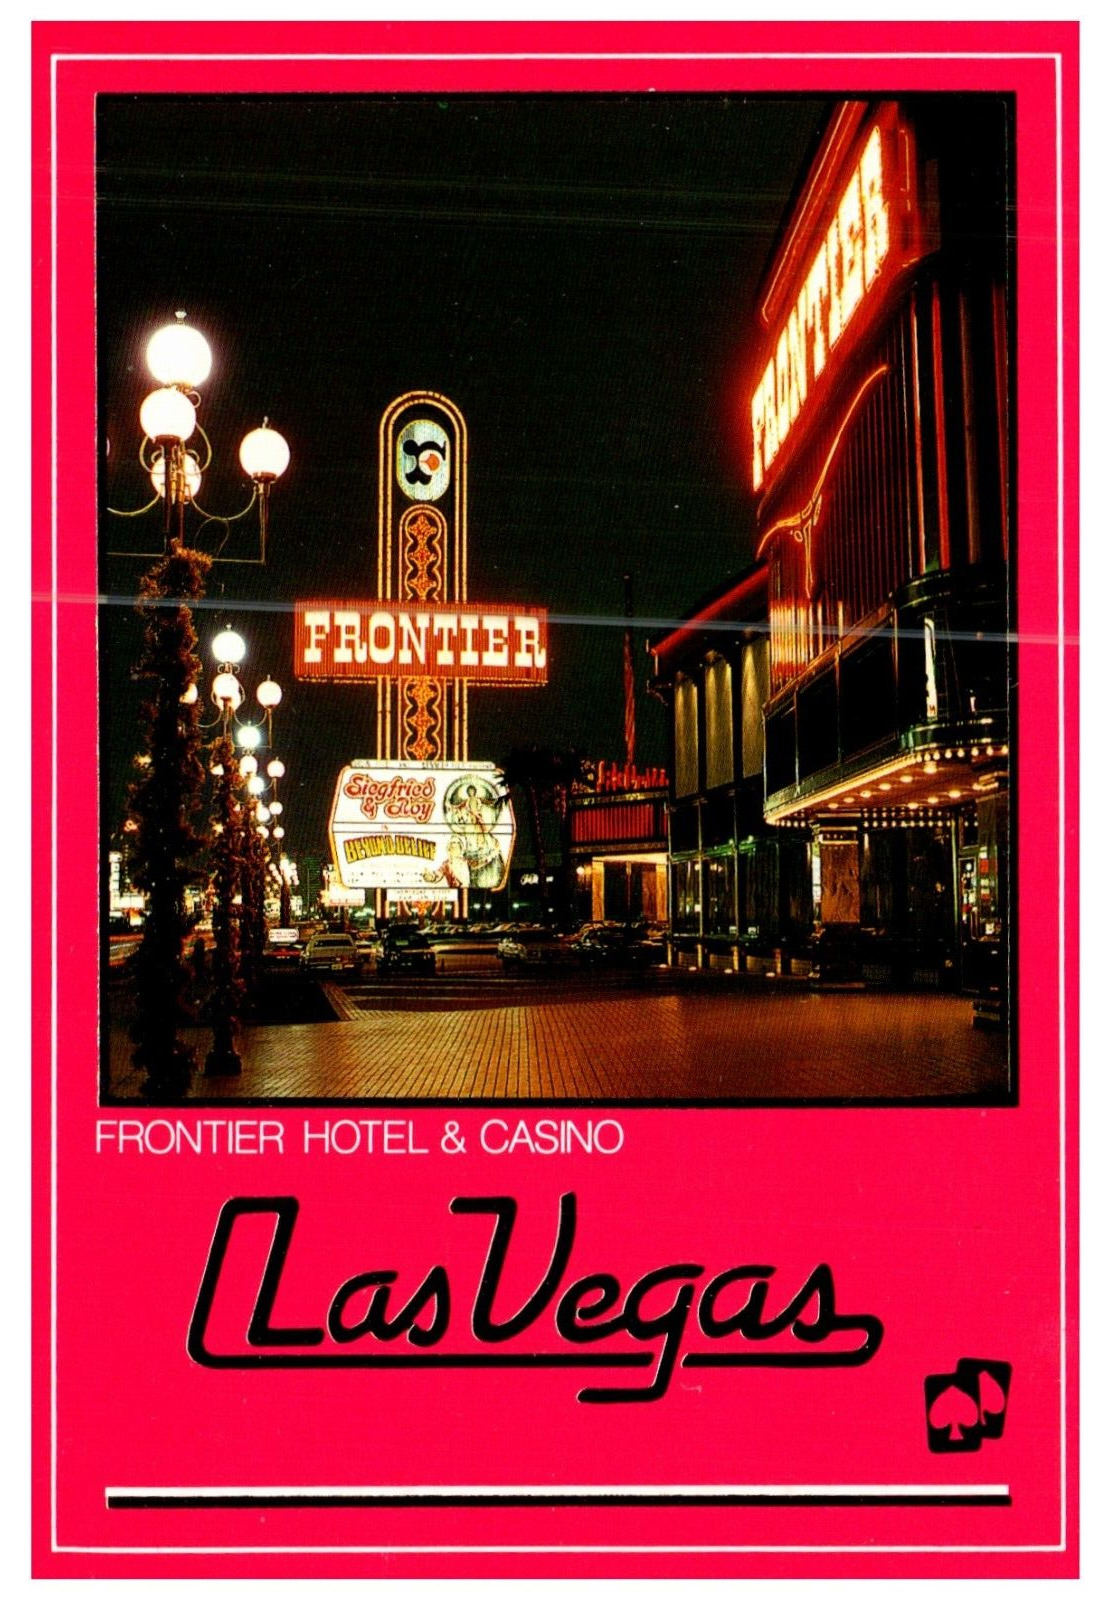 Frontier Hotel & Casino Las Vegas, NV Nevada Hotel Casino Advertising Postcard